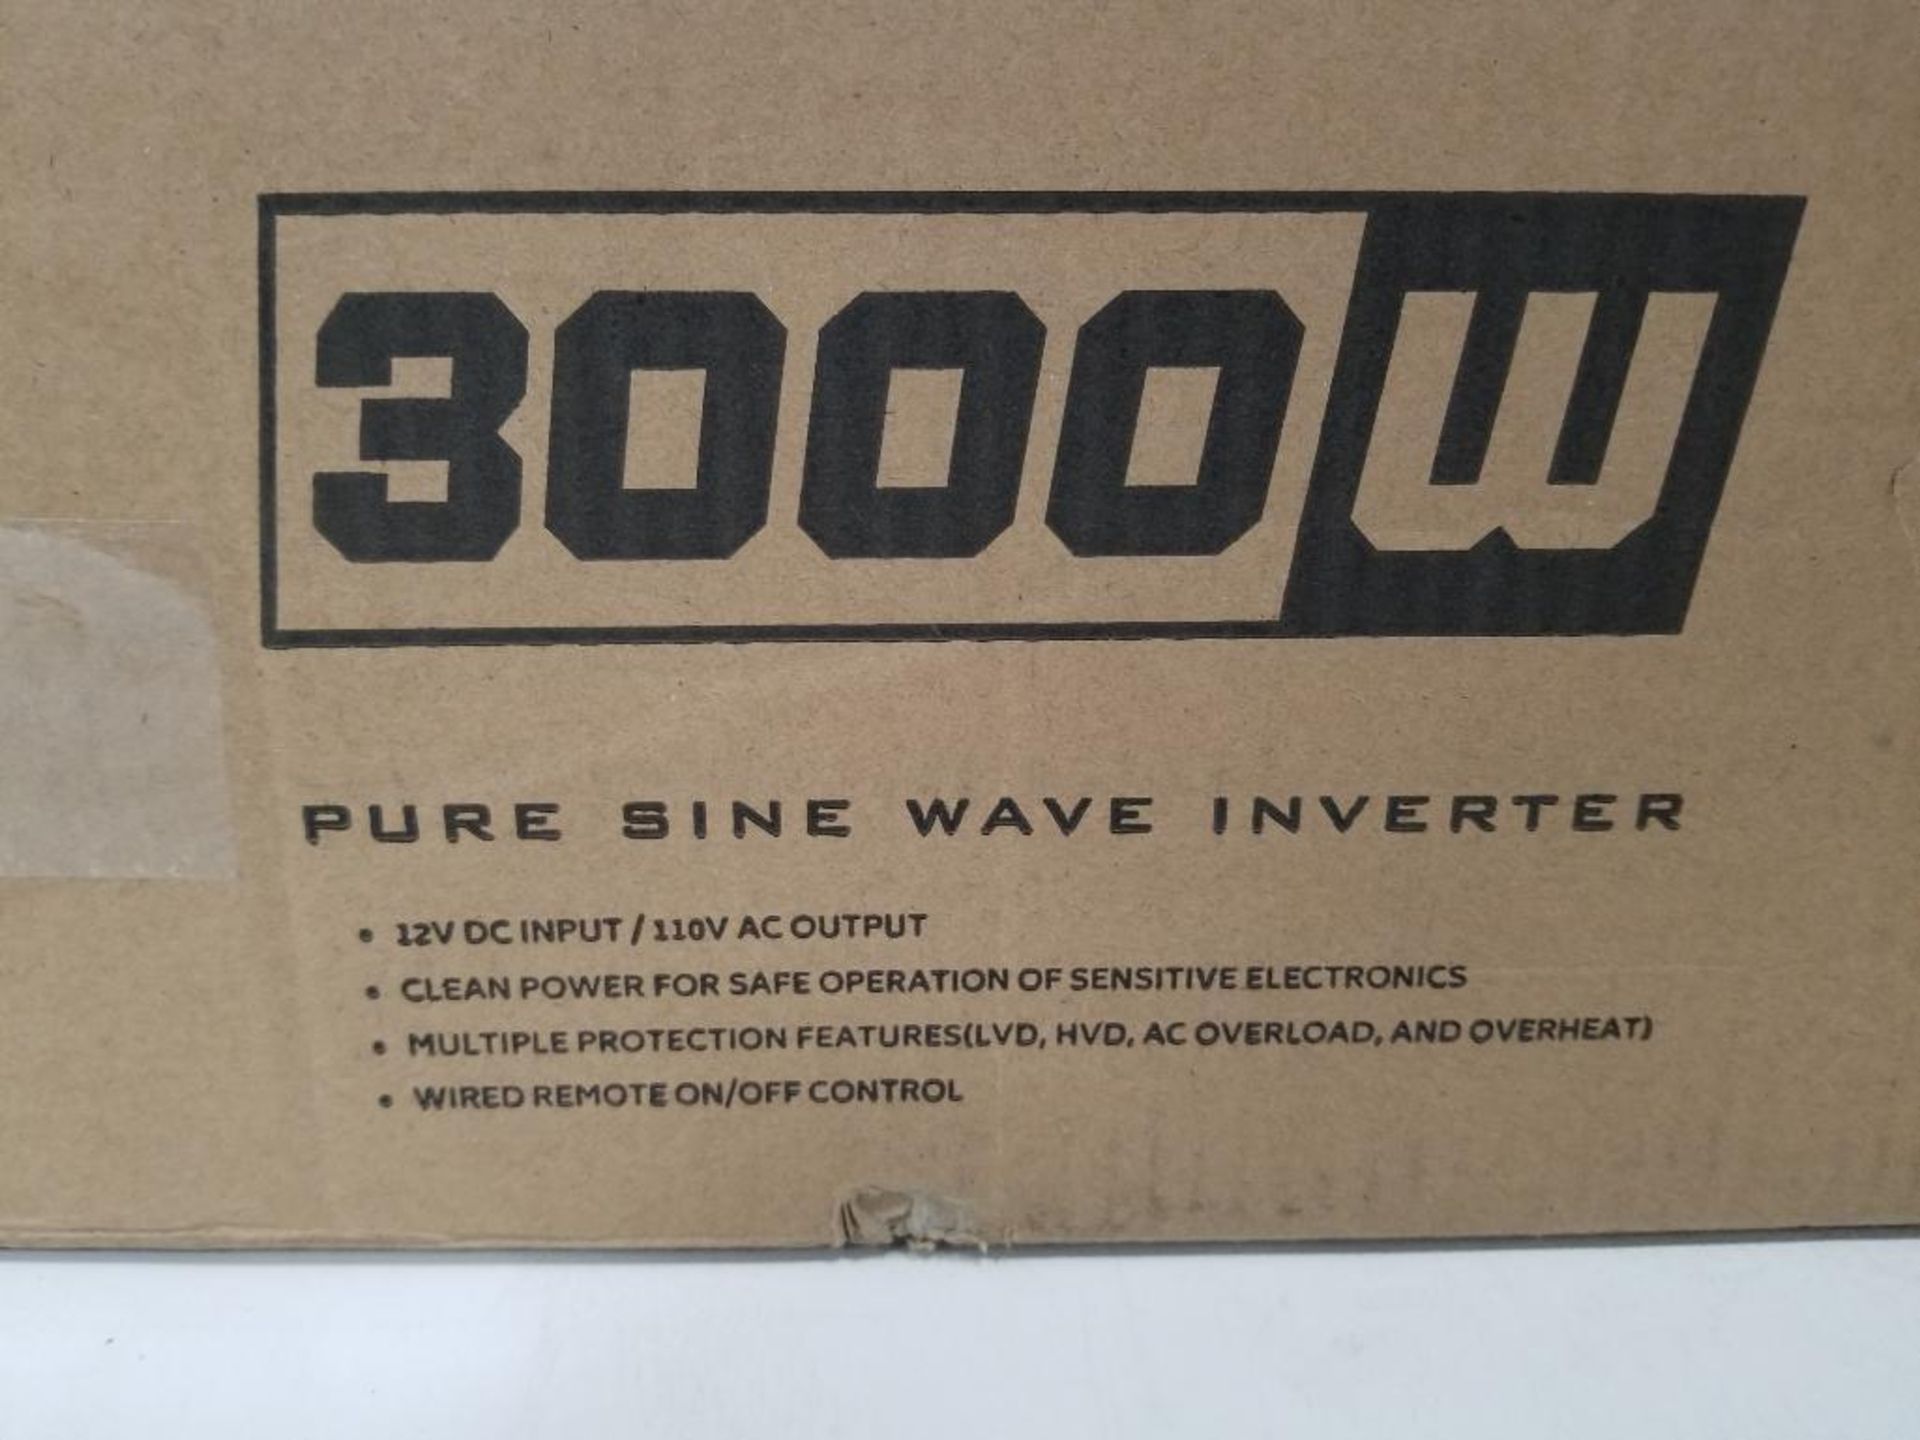 Pure Sine wave inverter 3000W. RNG-INVT-3000-12V. New in box. - Image 2 of 3